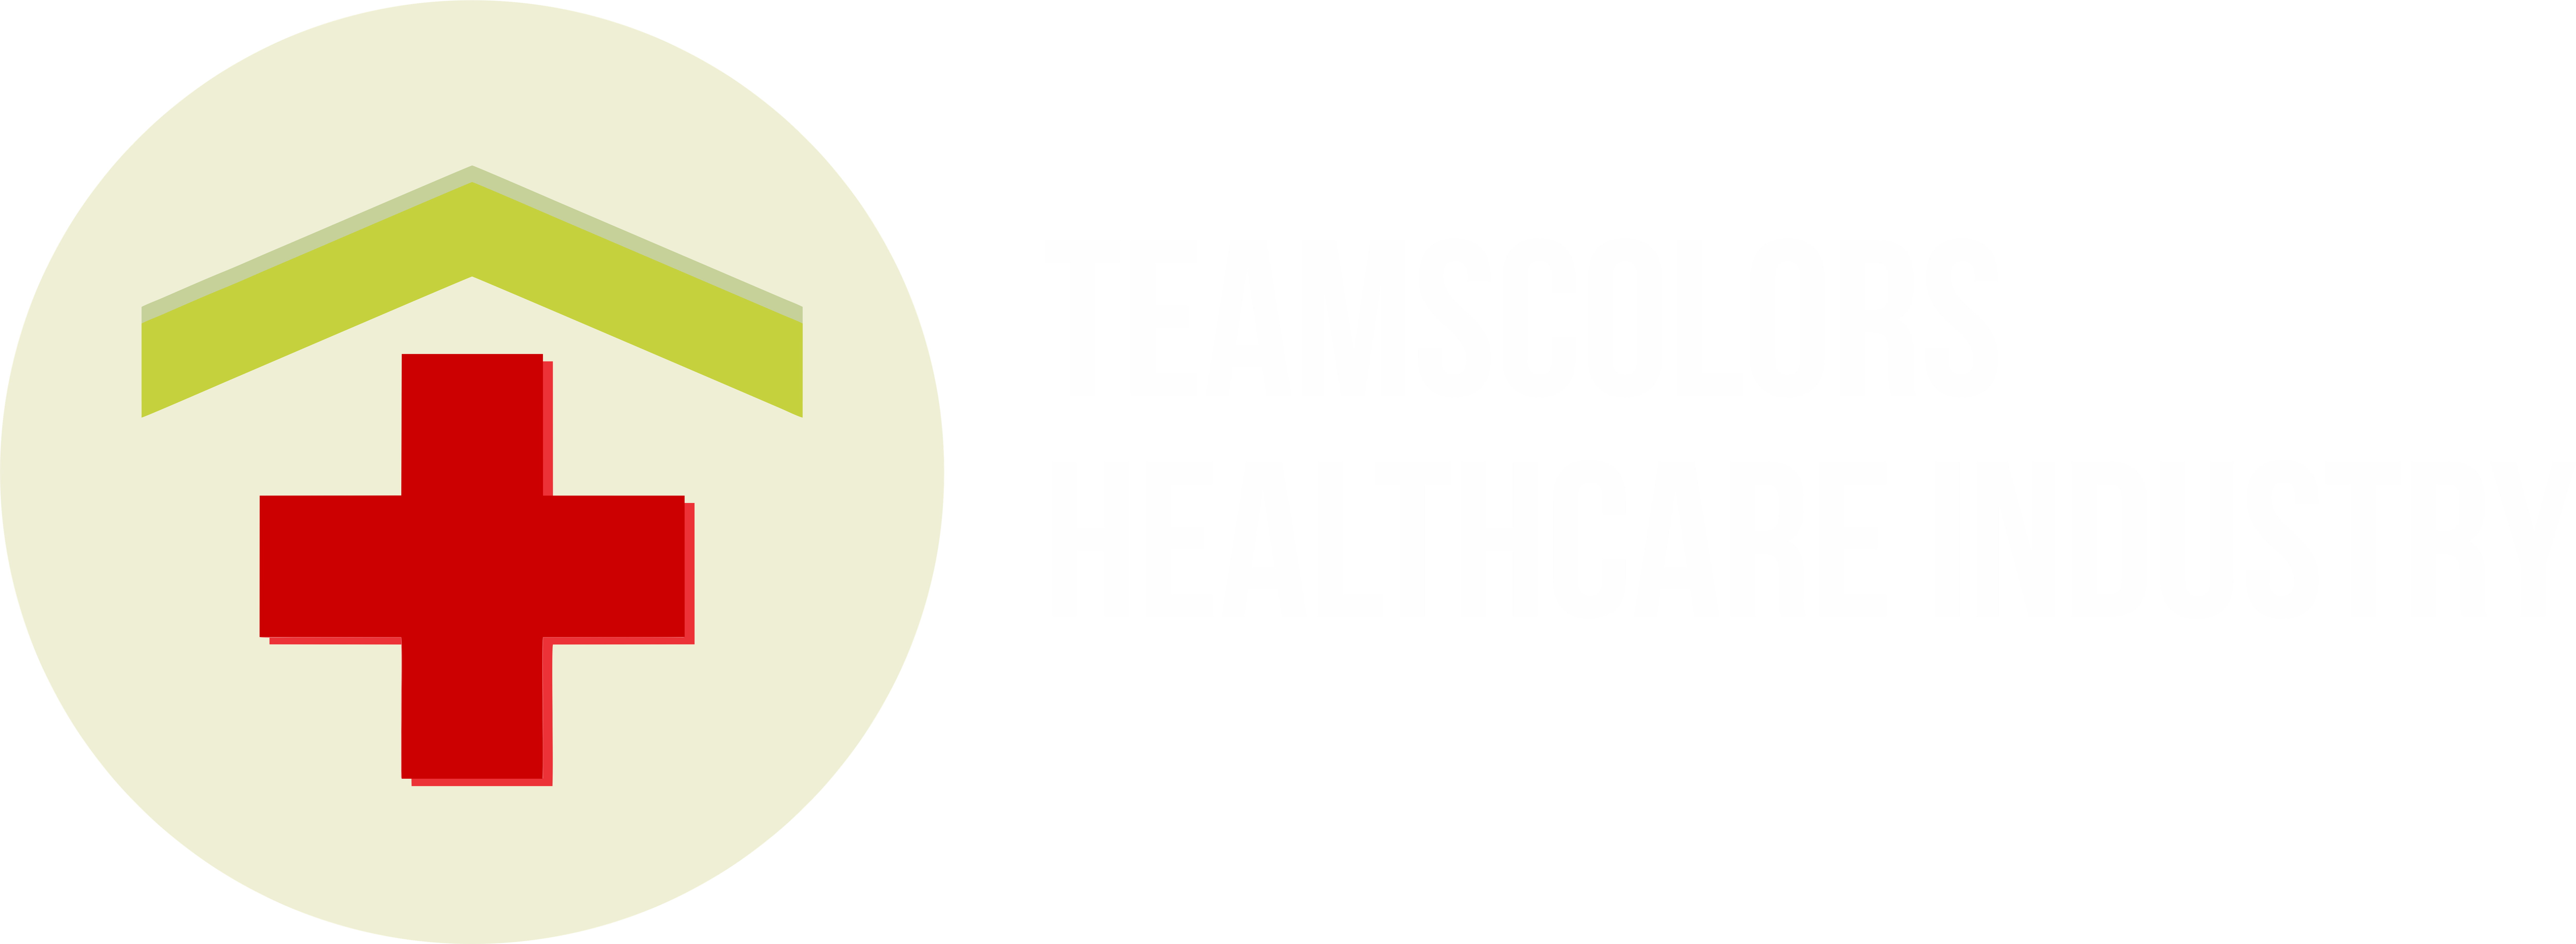 Teamwork clipart healthcare teamwork. Industry teams colored brain